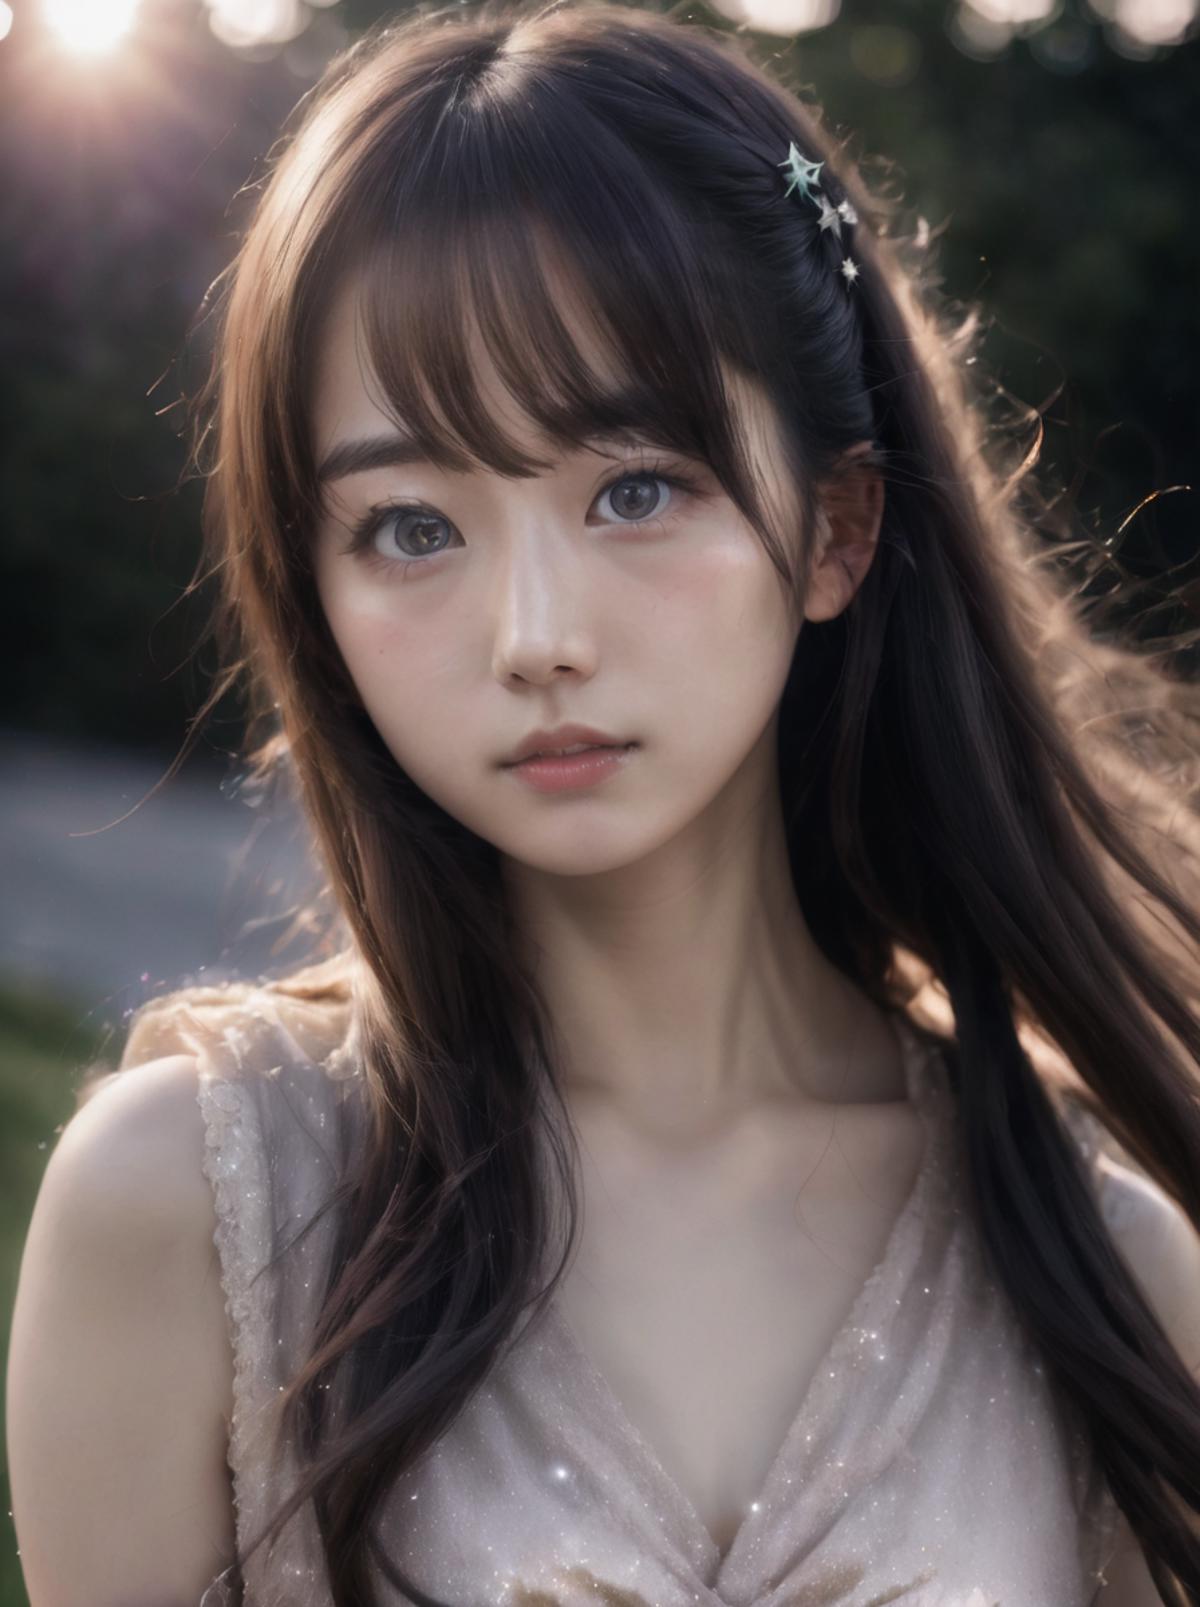 Japanese Girl - SDXL image by ld1222